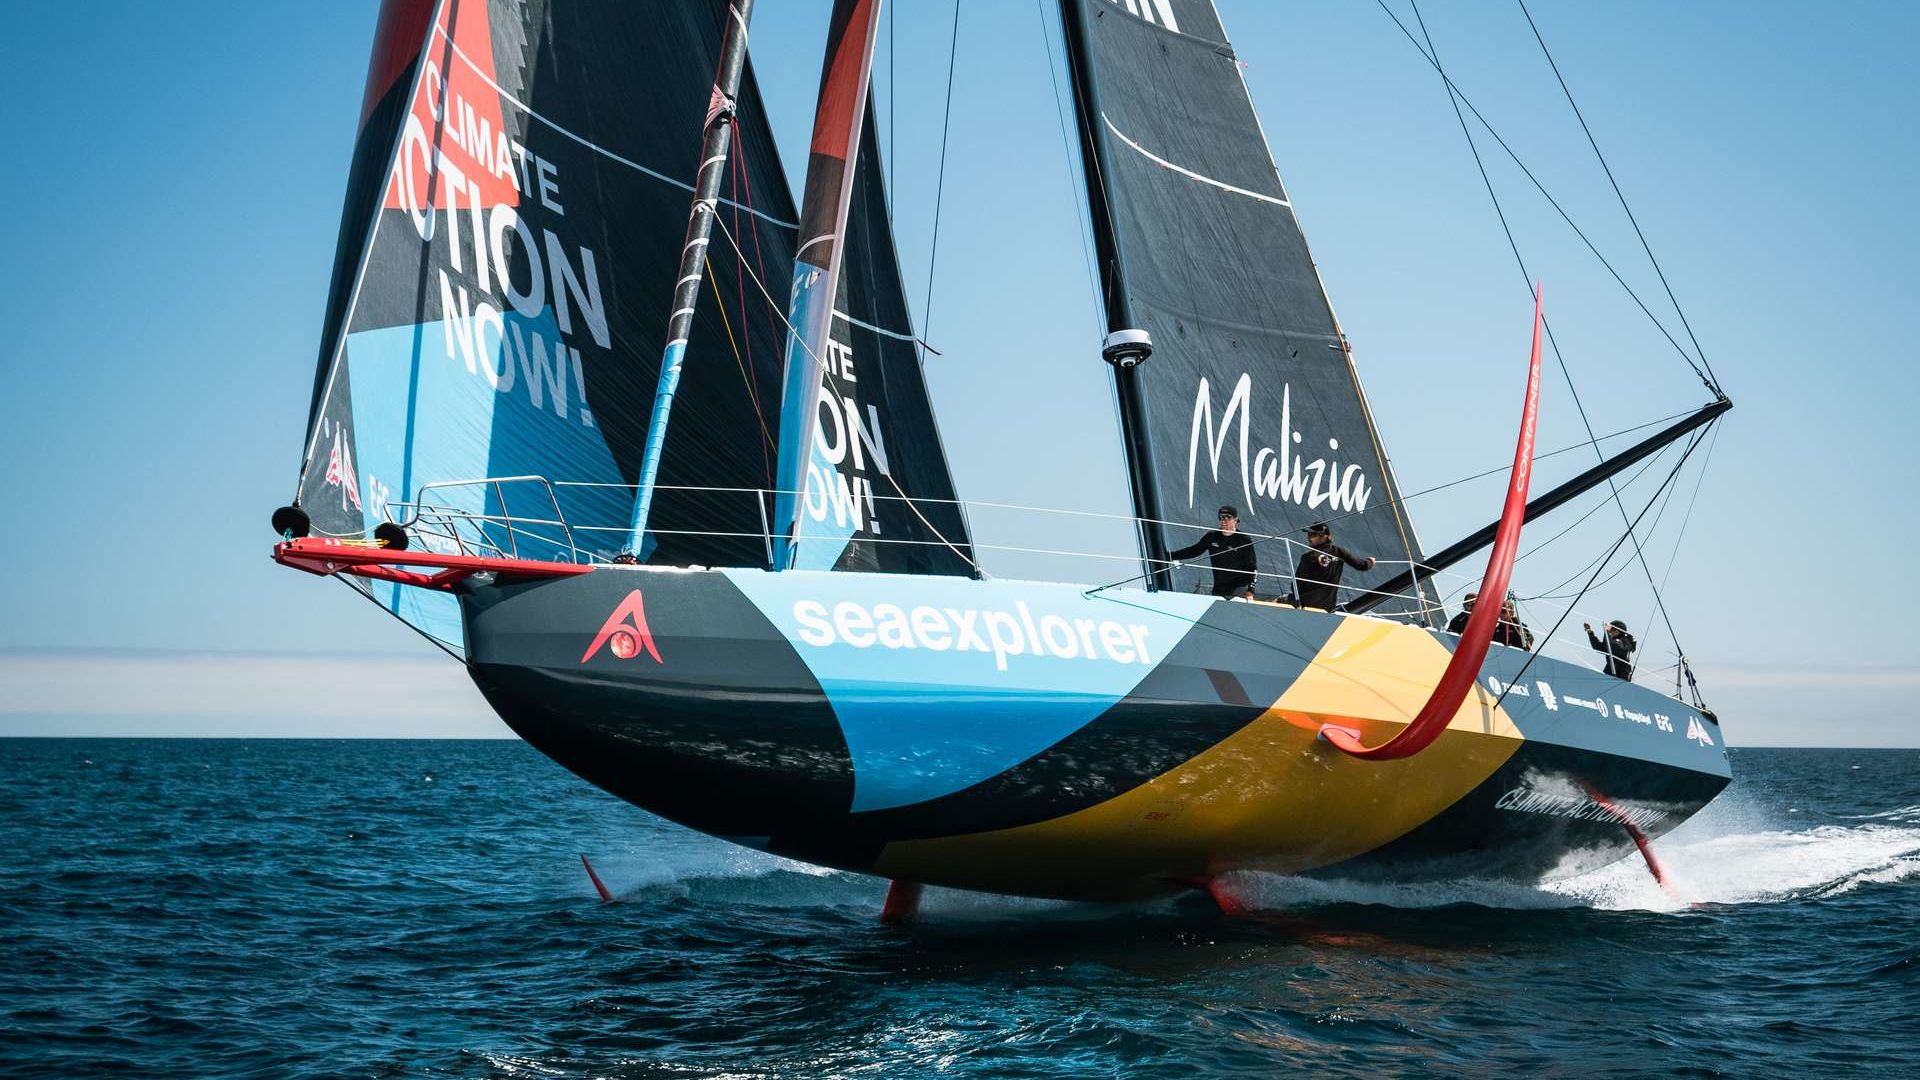 Malizia Seaexplorer Sailing Racing Yacht